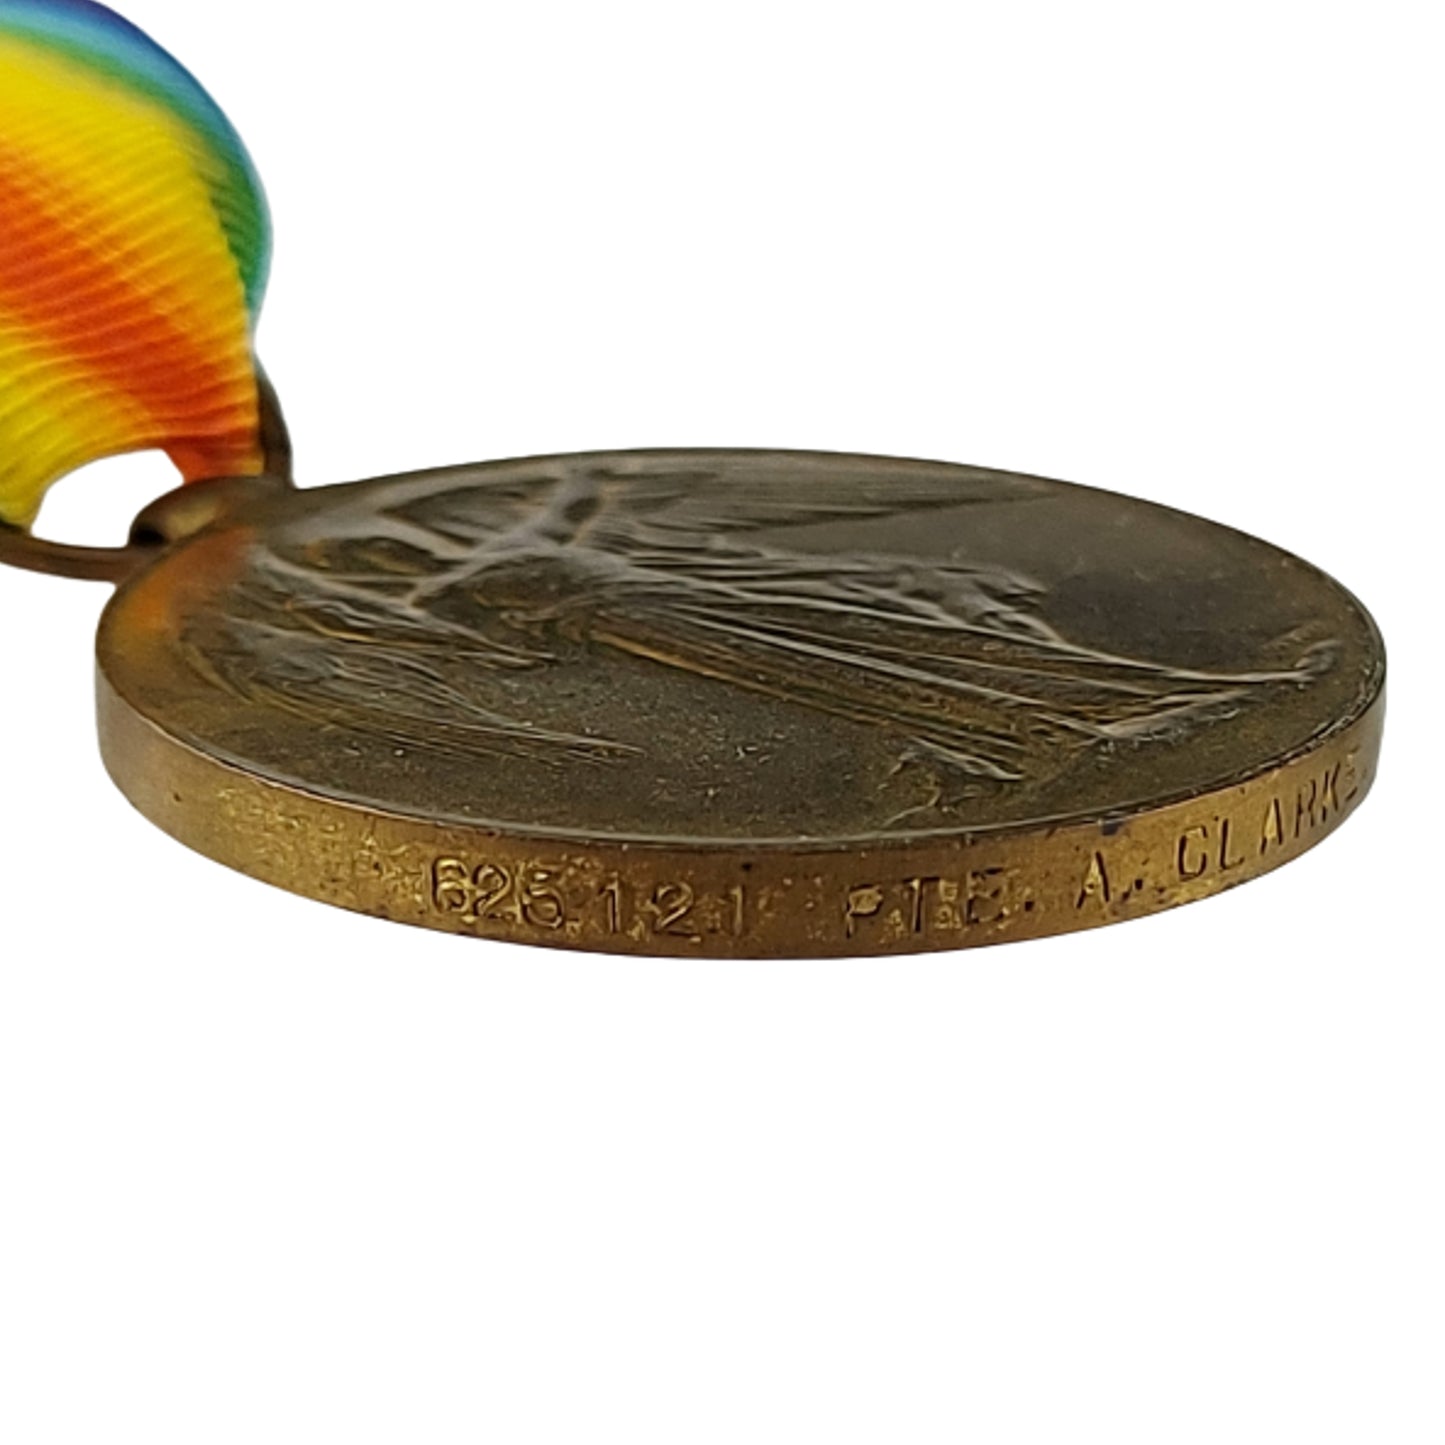 WW1 Canadian Victory Medal - 10th Battalion Calgary. Alberta